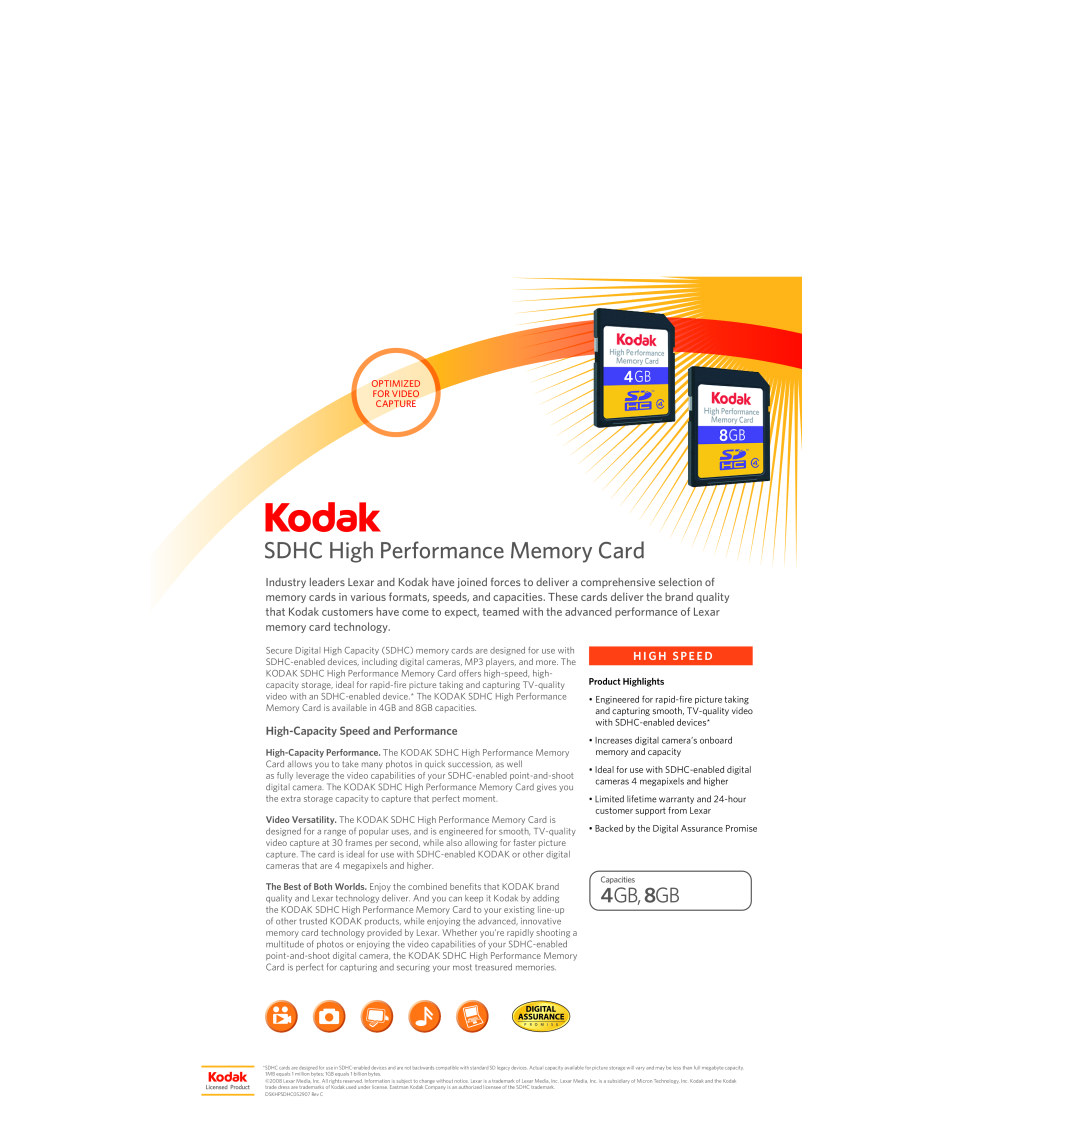 Kodak DSKHPSDHC052907 warranty SDHC High Performance Memory Card, 4GB, 8GB, High-Capacity Speed and Performance 